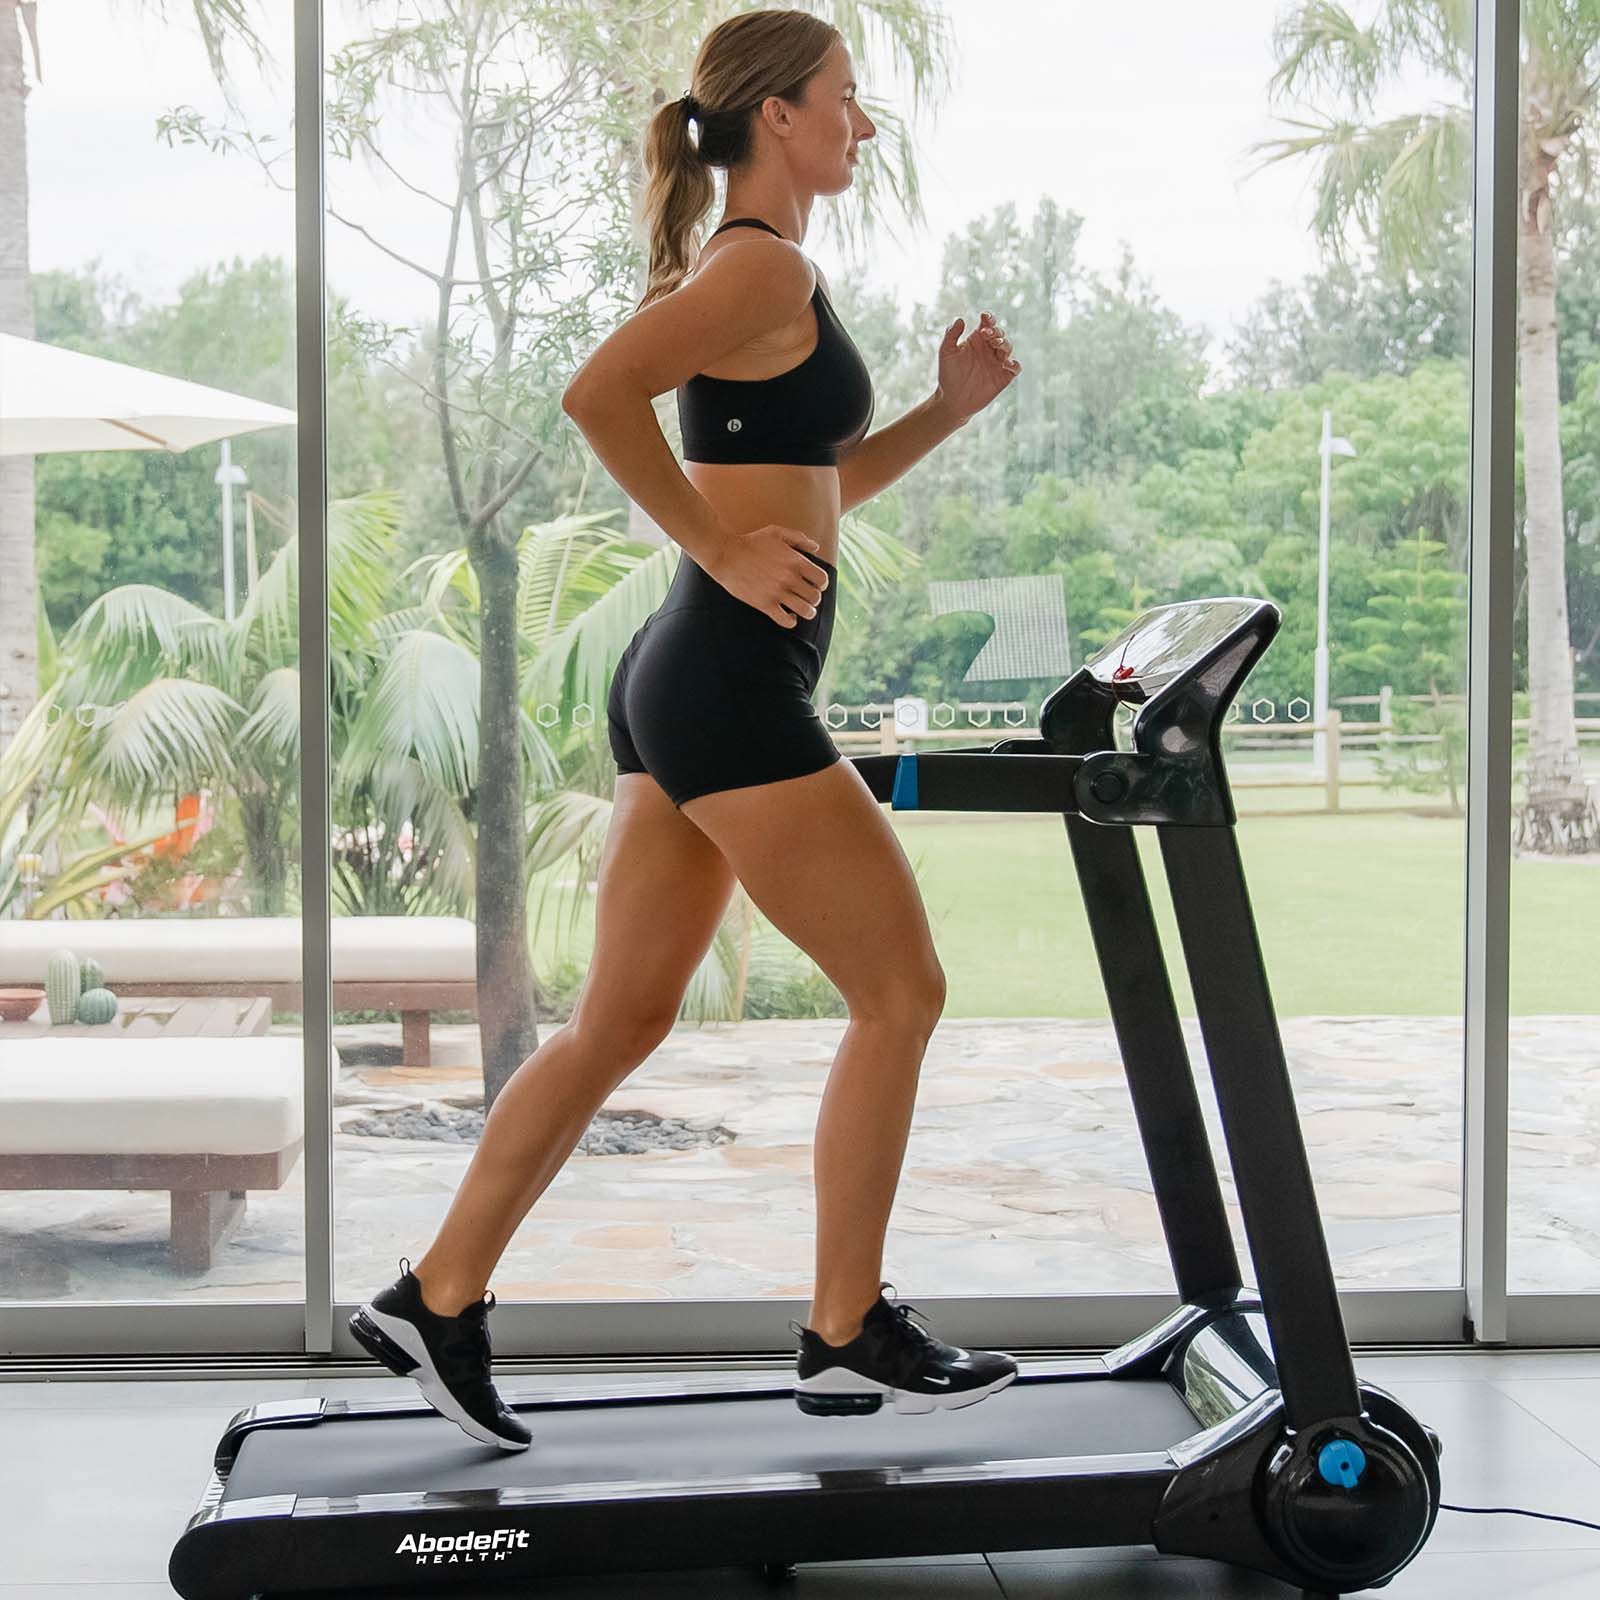 WalkSlim 810 Treadmill - Being Run On